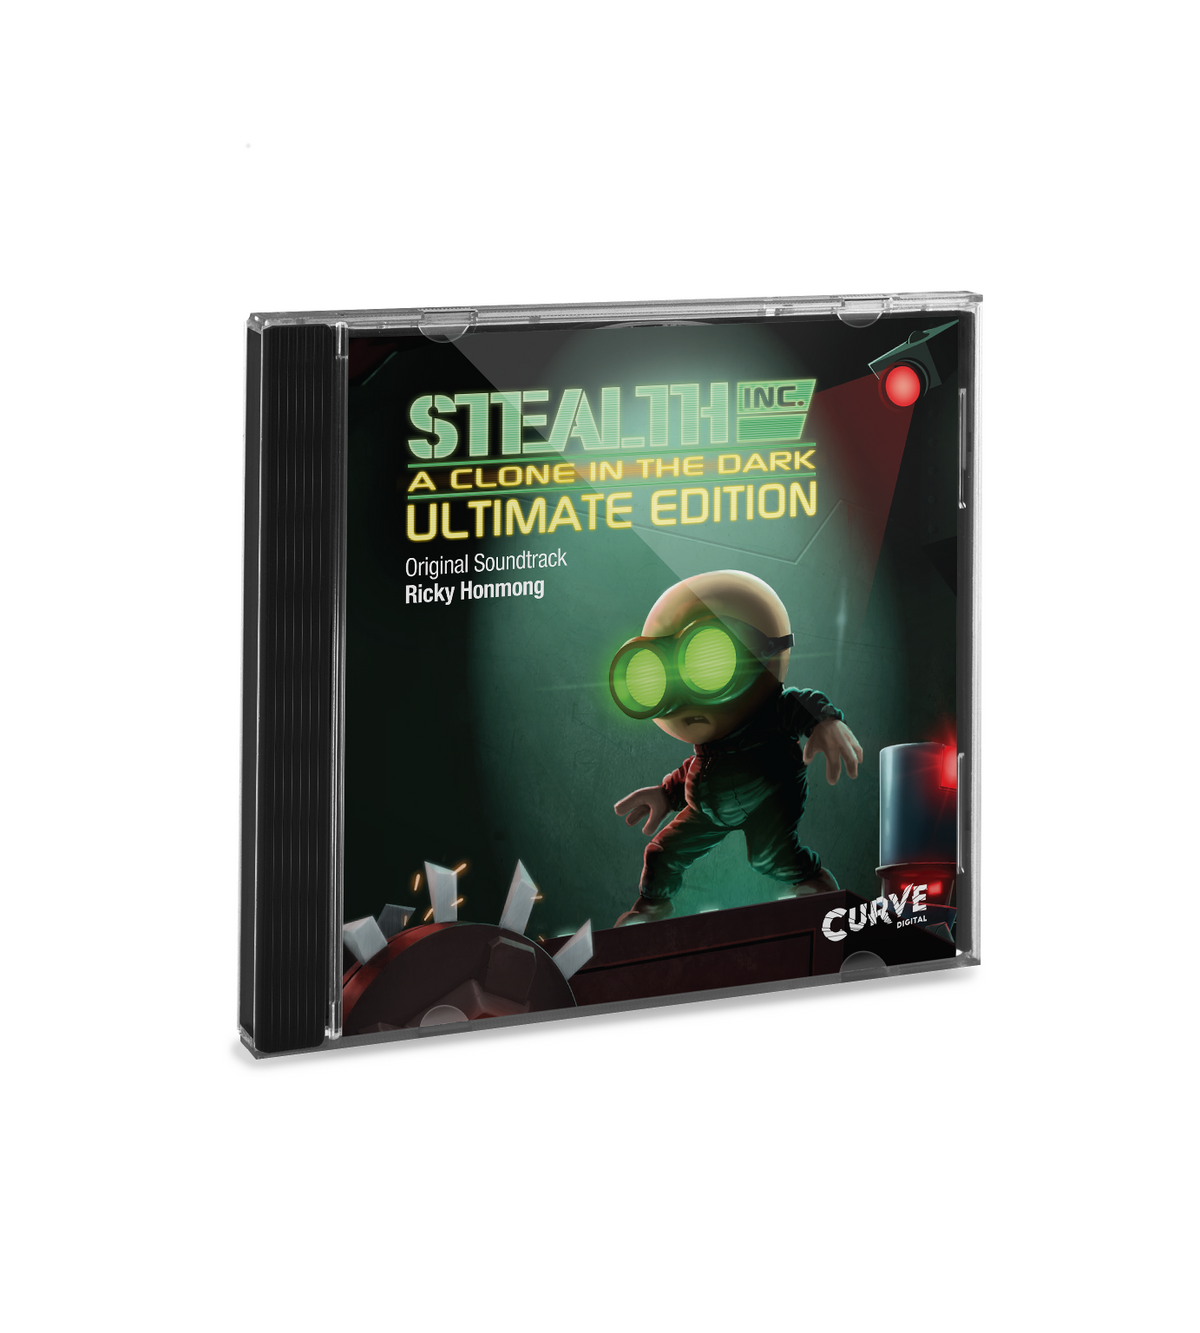 Stealth Inc Soundtrack CD